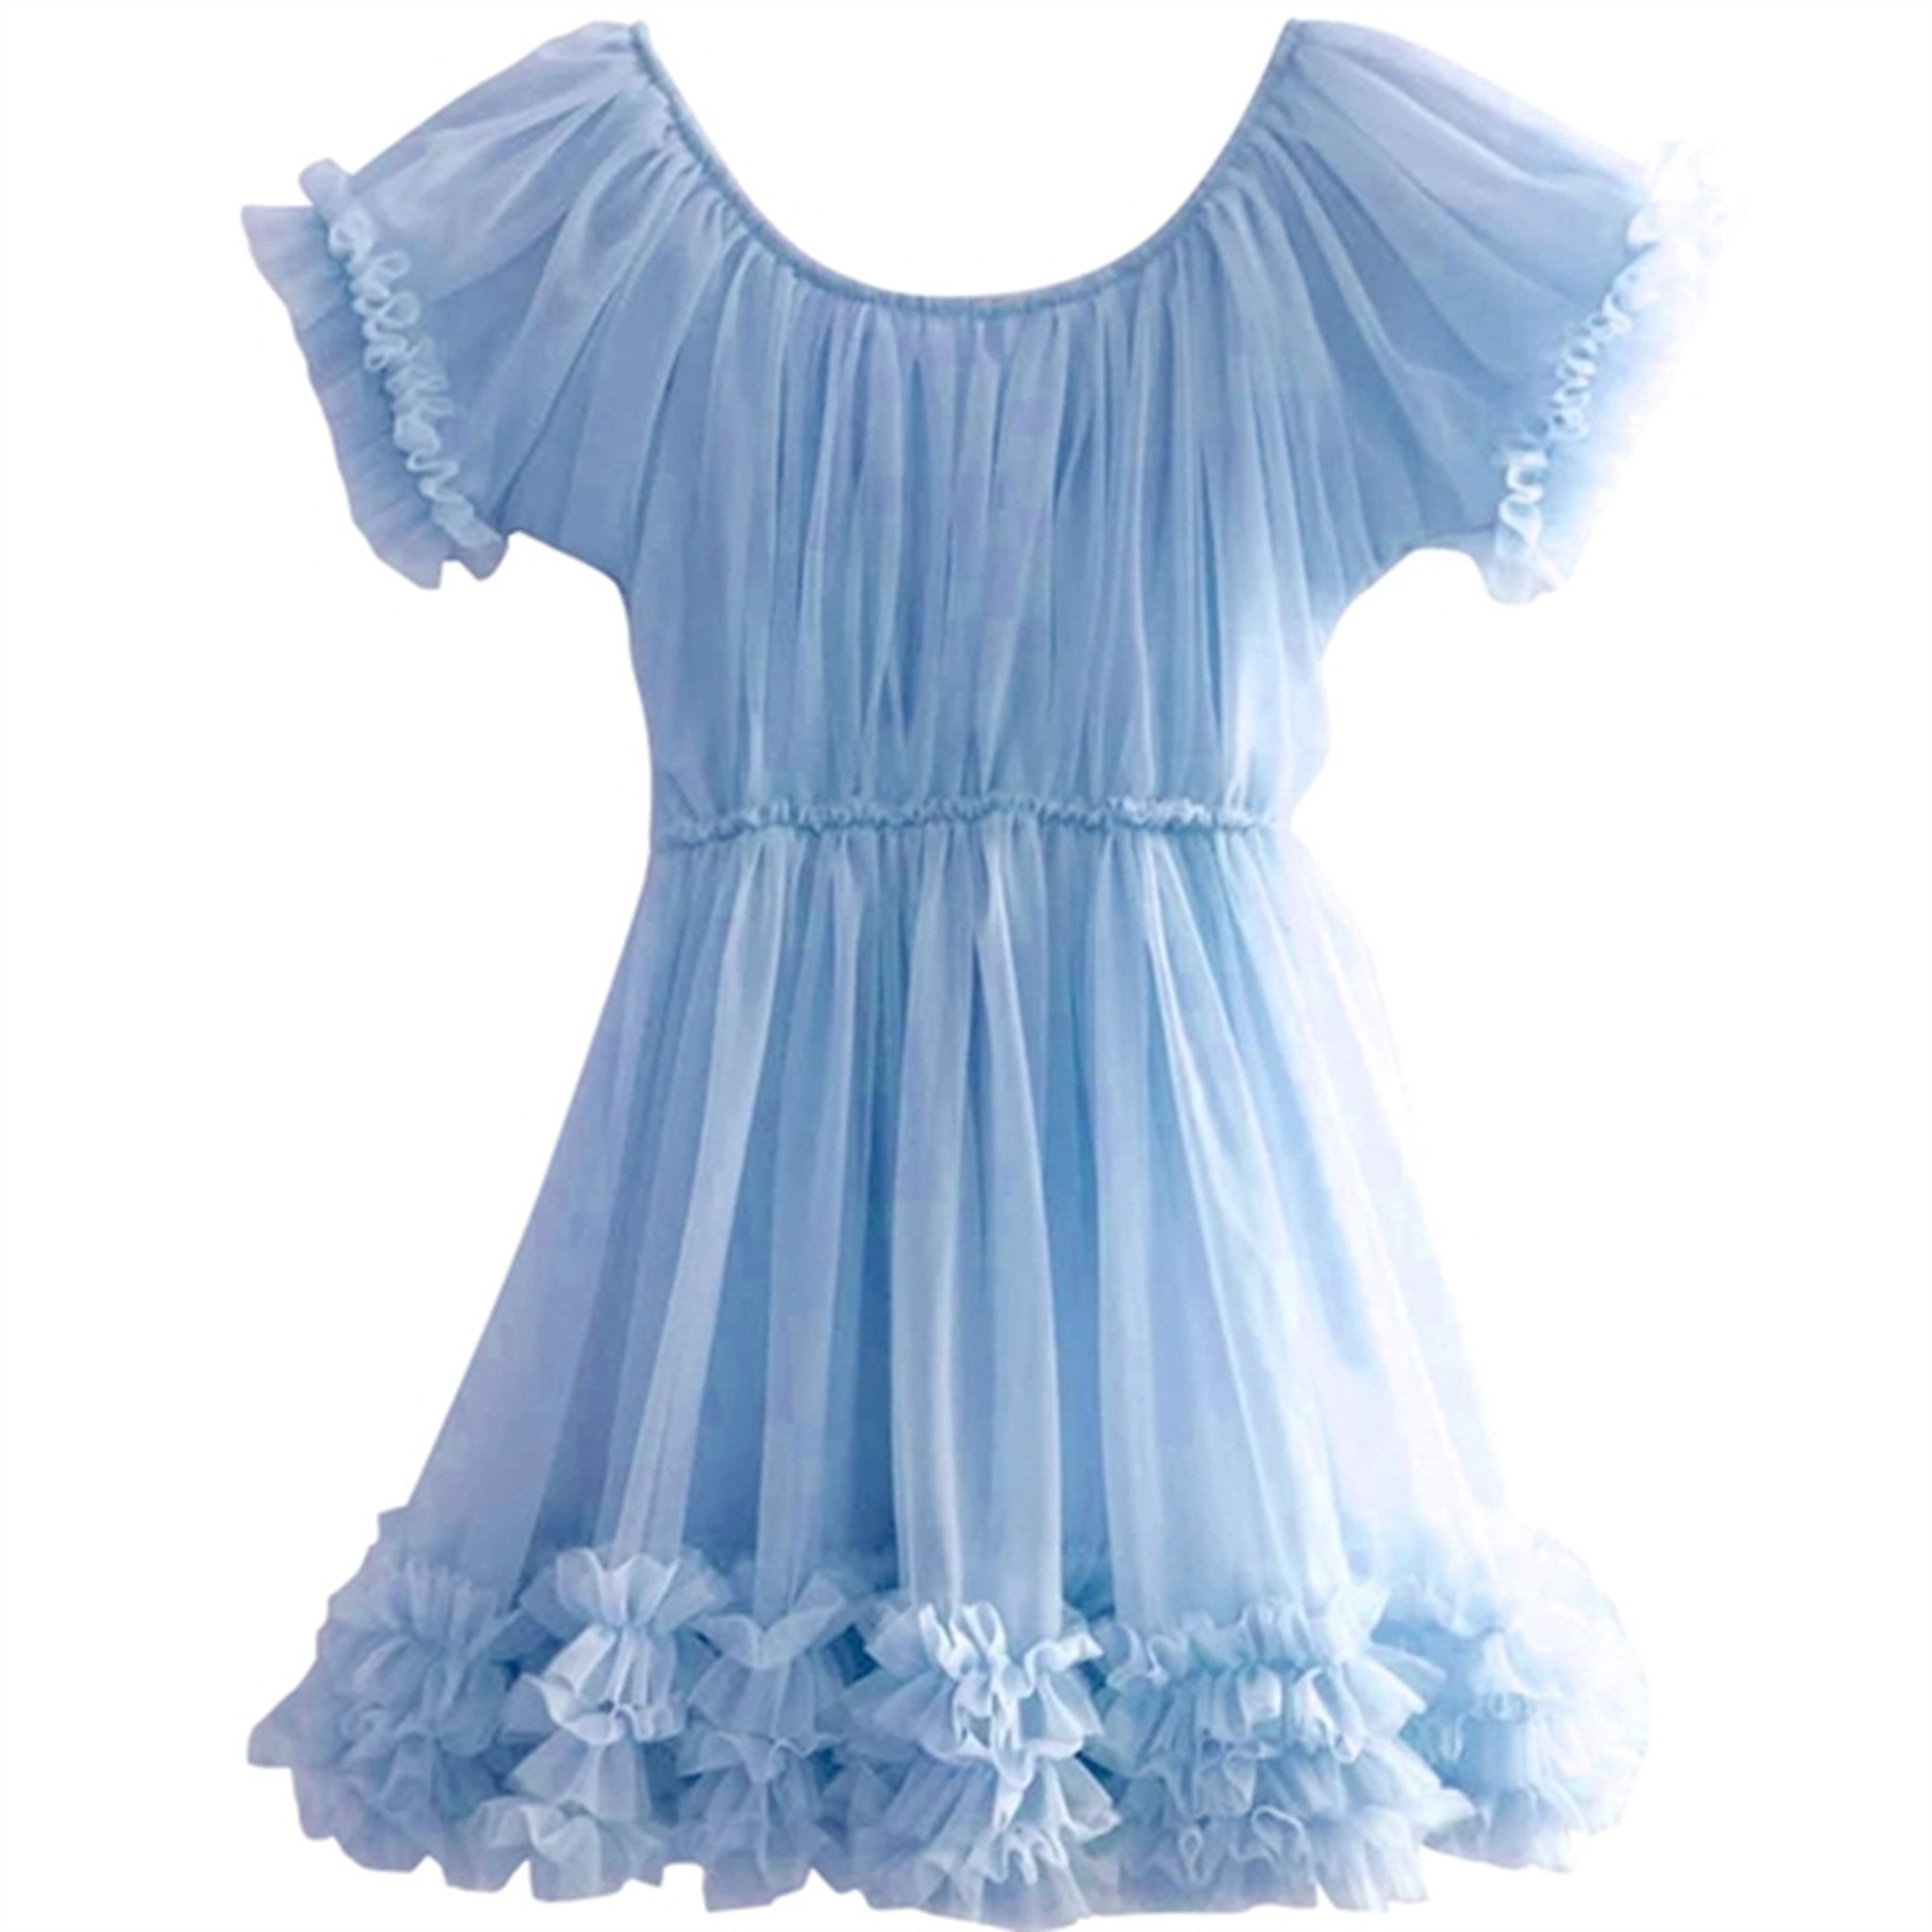 Dolly by Le Petit Frilly Dress Light Blue